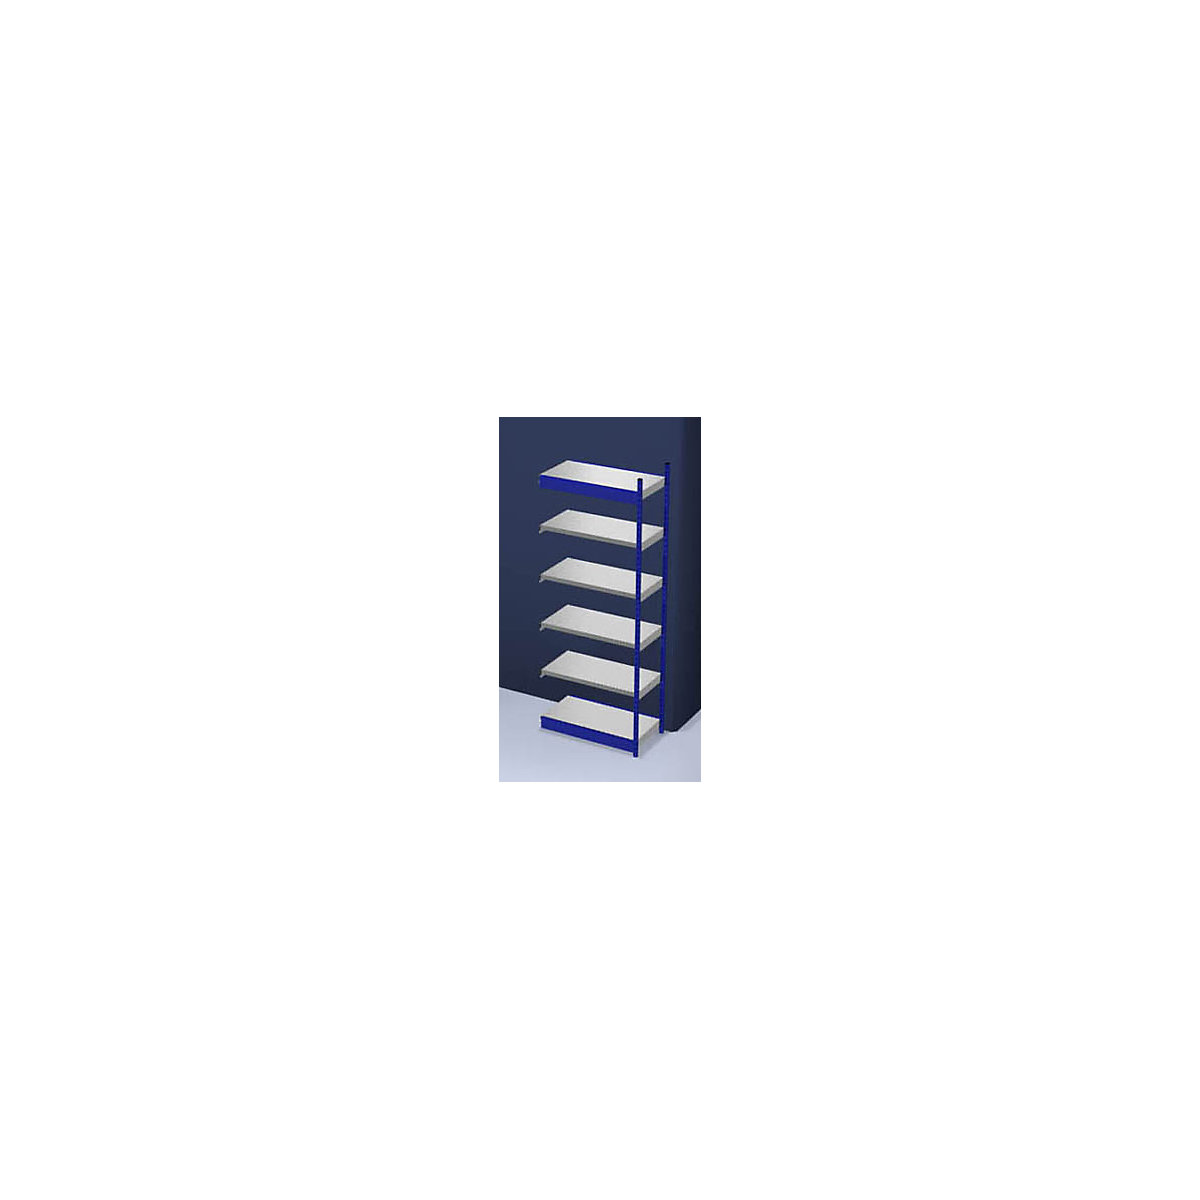 Stable boltless shelf unit, single sided – hofe, shelf unit height 2500 mm, blue / zinc-plated, shelf width 1025 mm, extension shelf unit, width x depth 1025 x 500 mm-5